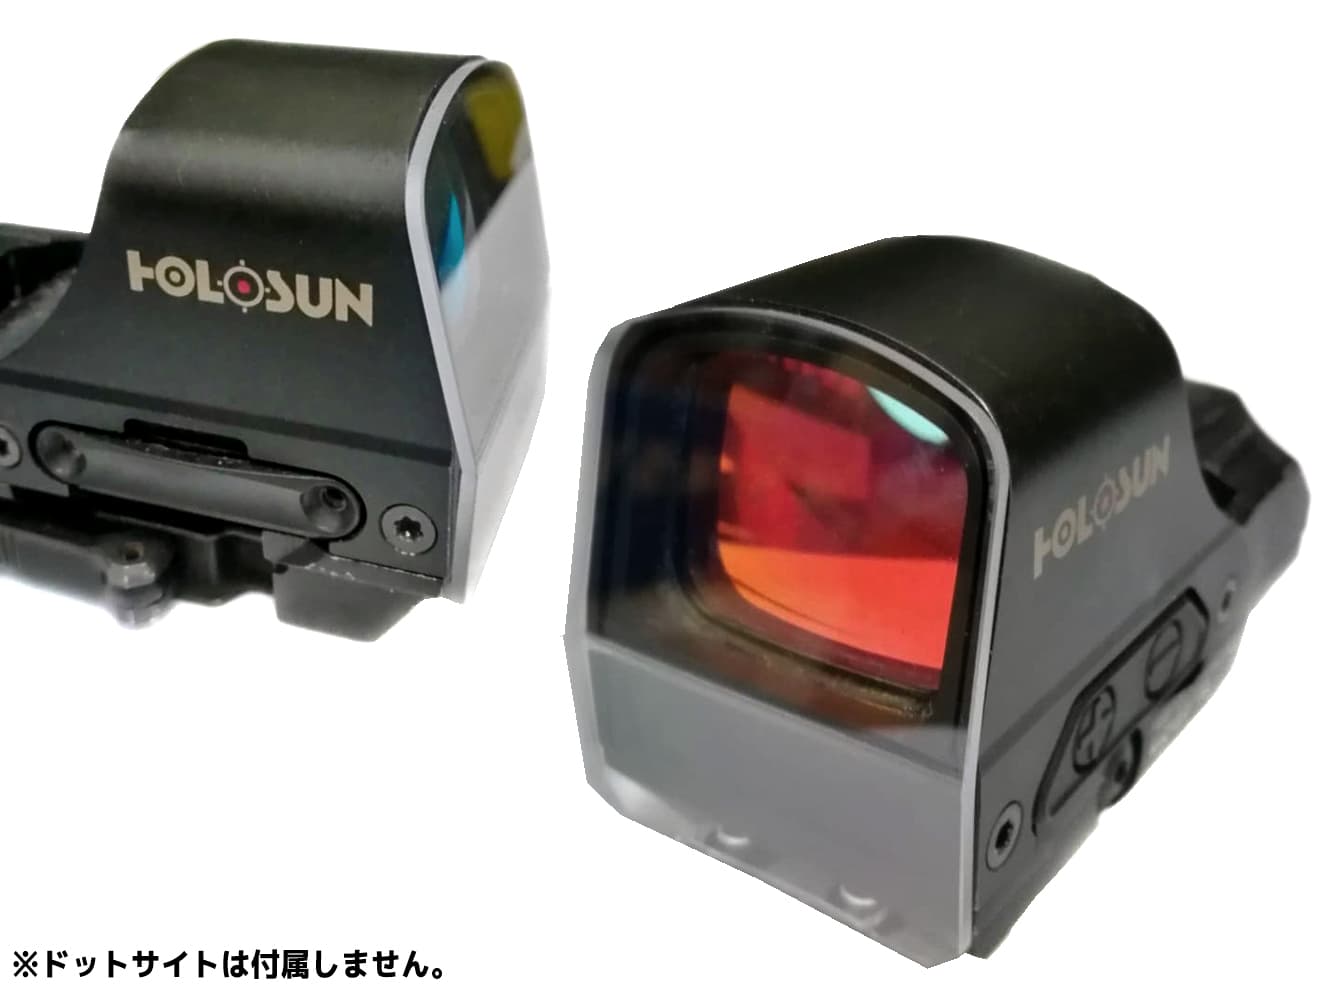 HUGGER Holosun 510C用 レンズプロテクター